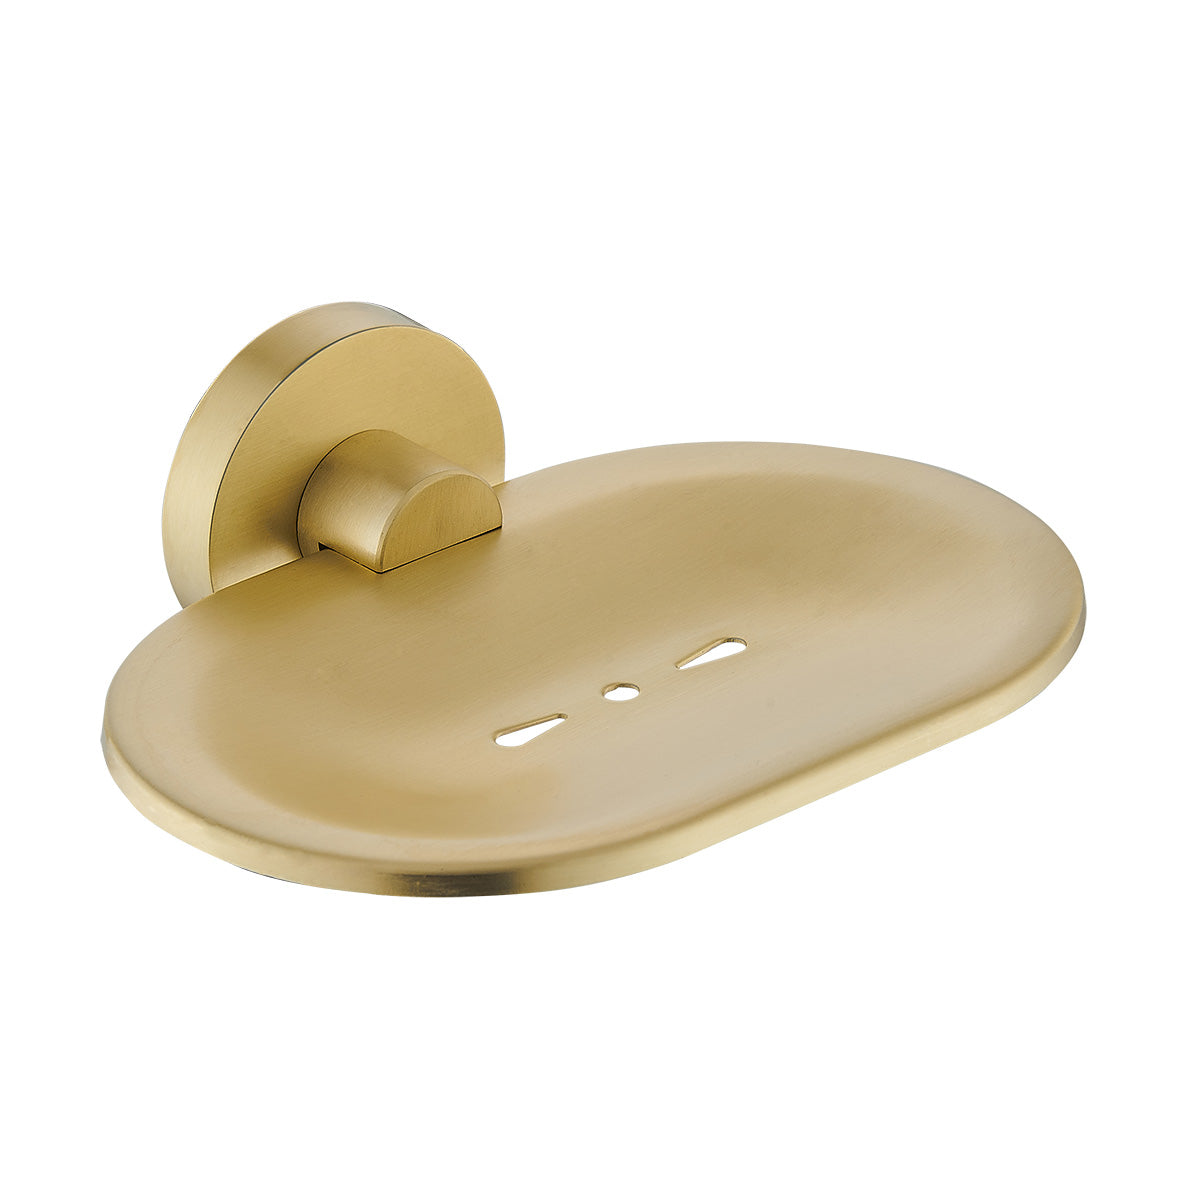 BA856 (BG) / Ideal Soap Dish (Brushed Gold)